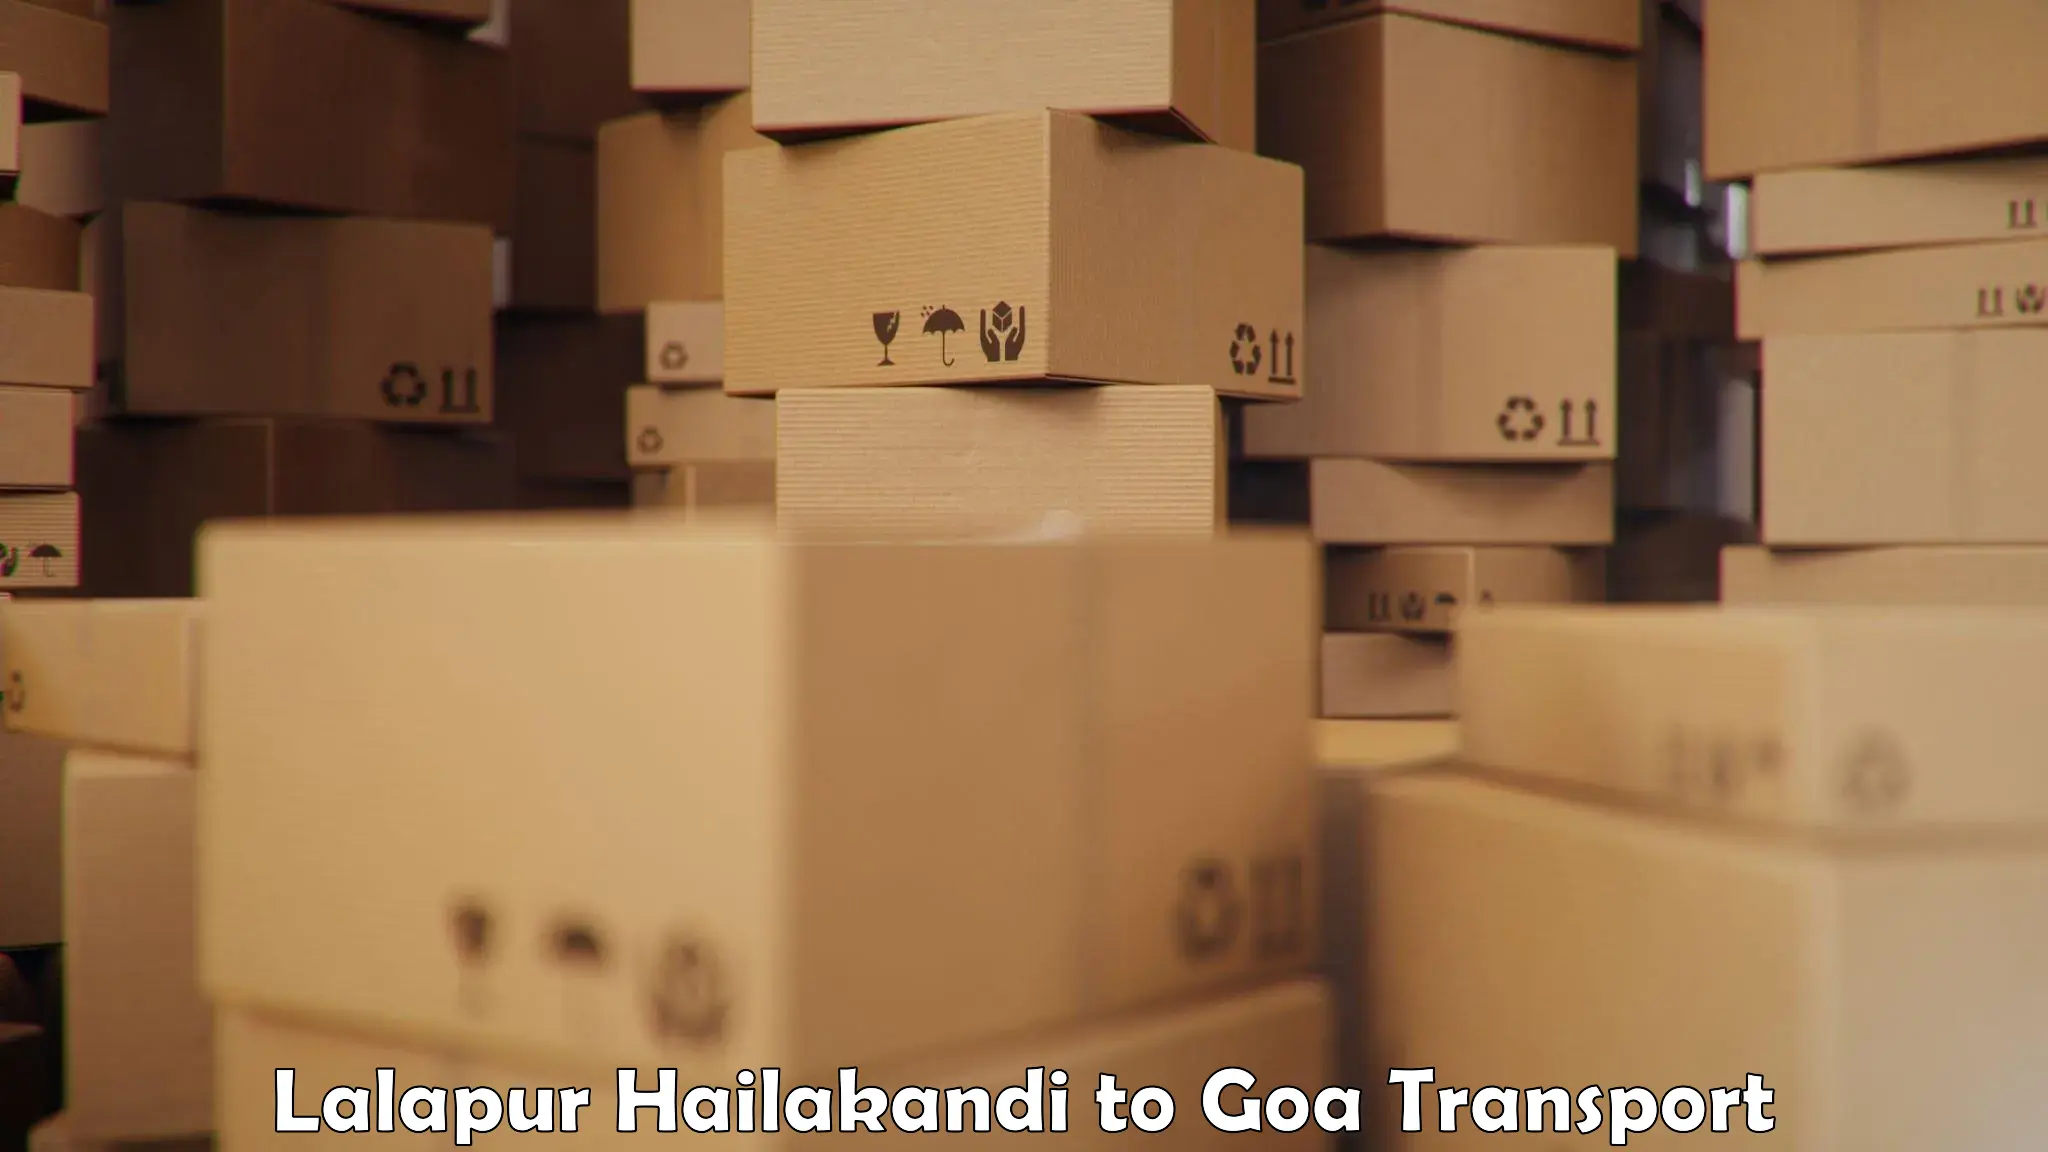 Delivery service Lalapur Hailakandi to Panaji